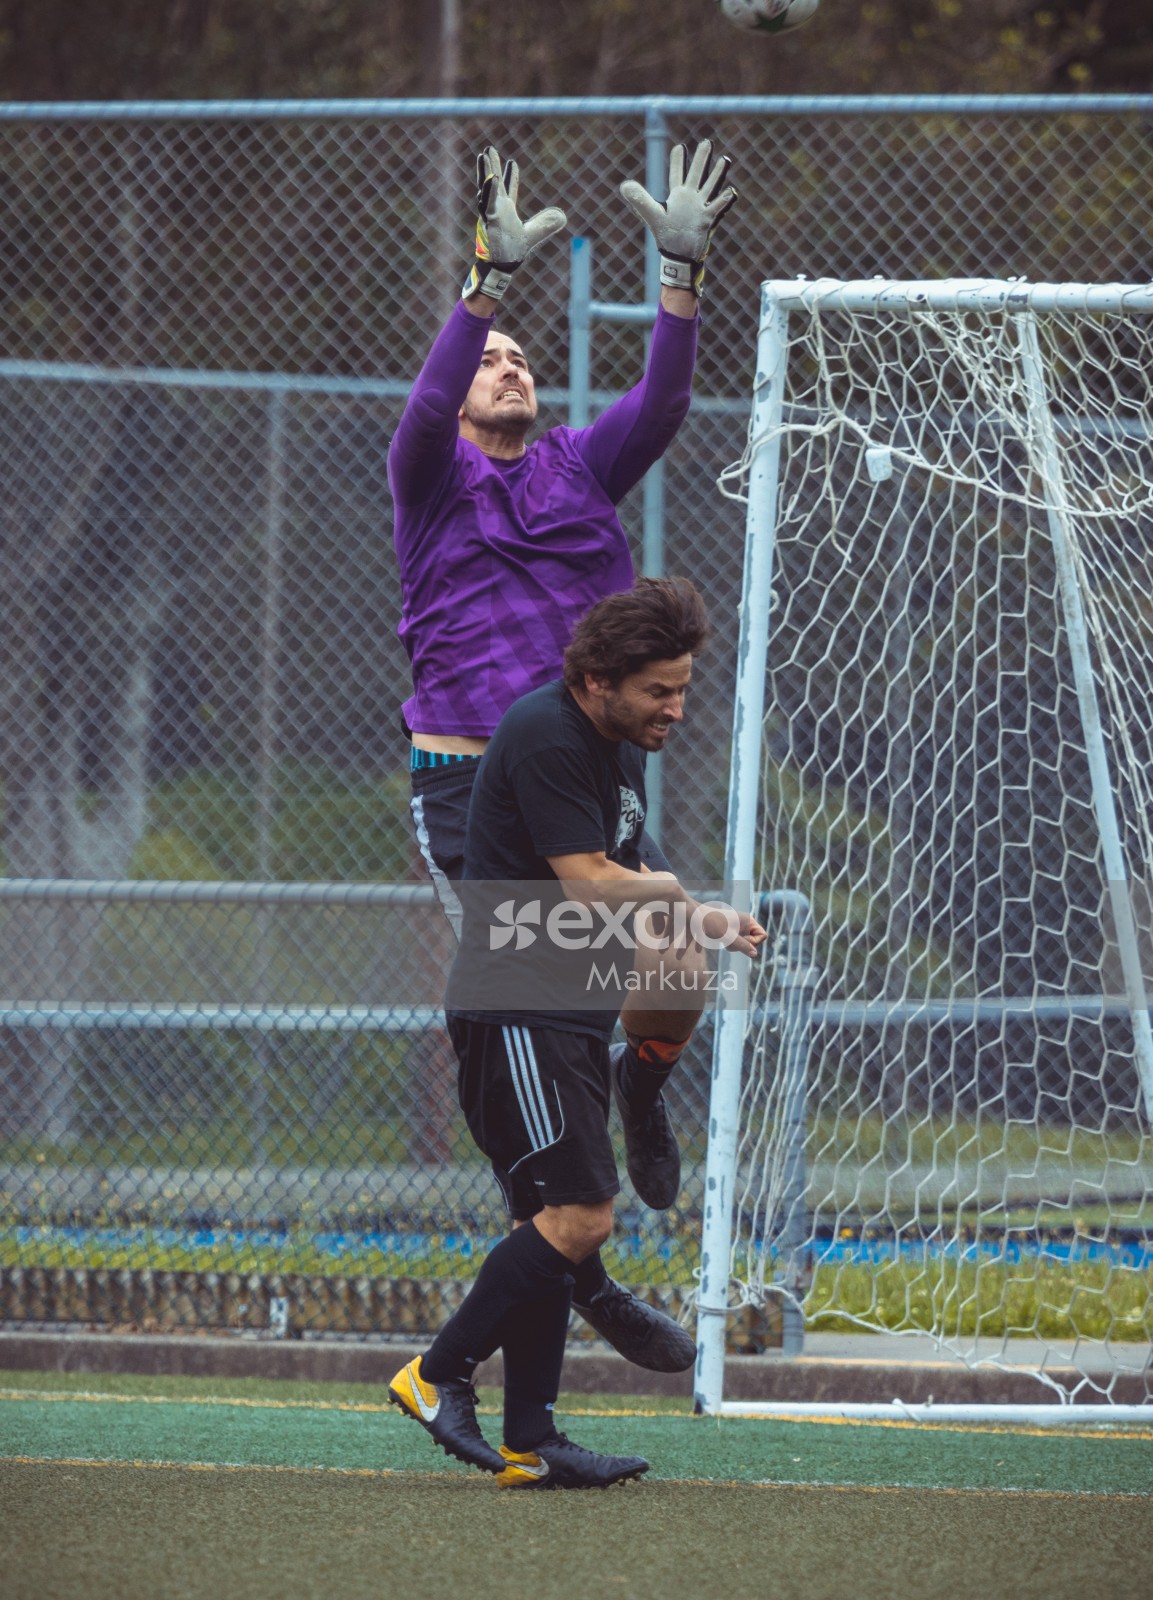 Goalkeeper in purple shirt trying to intercept ball midair - Sports Zone sunday league